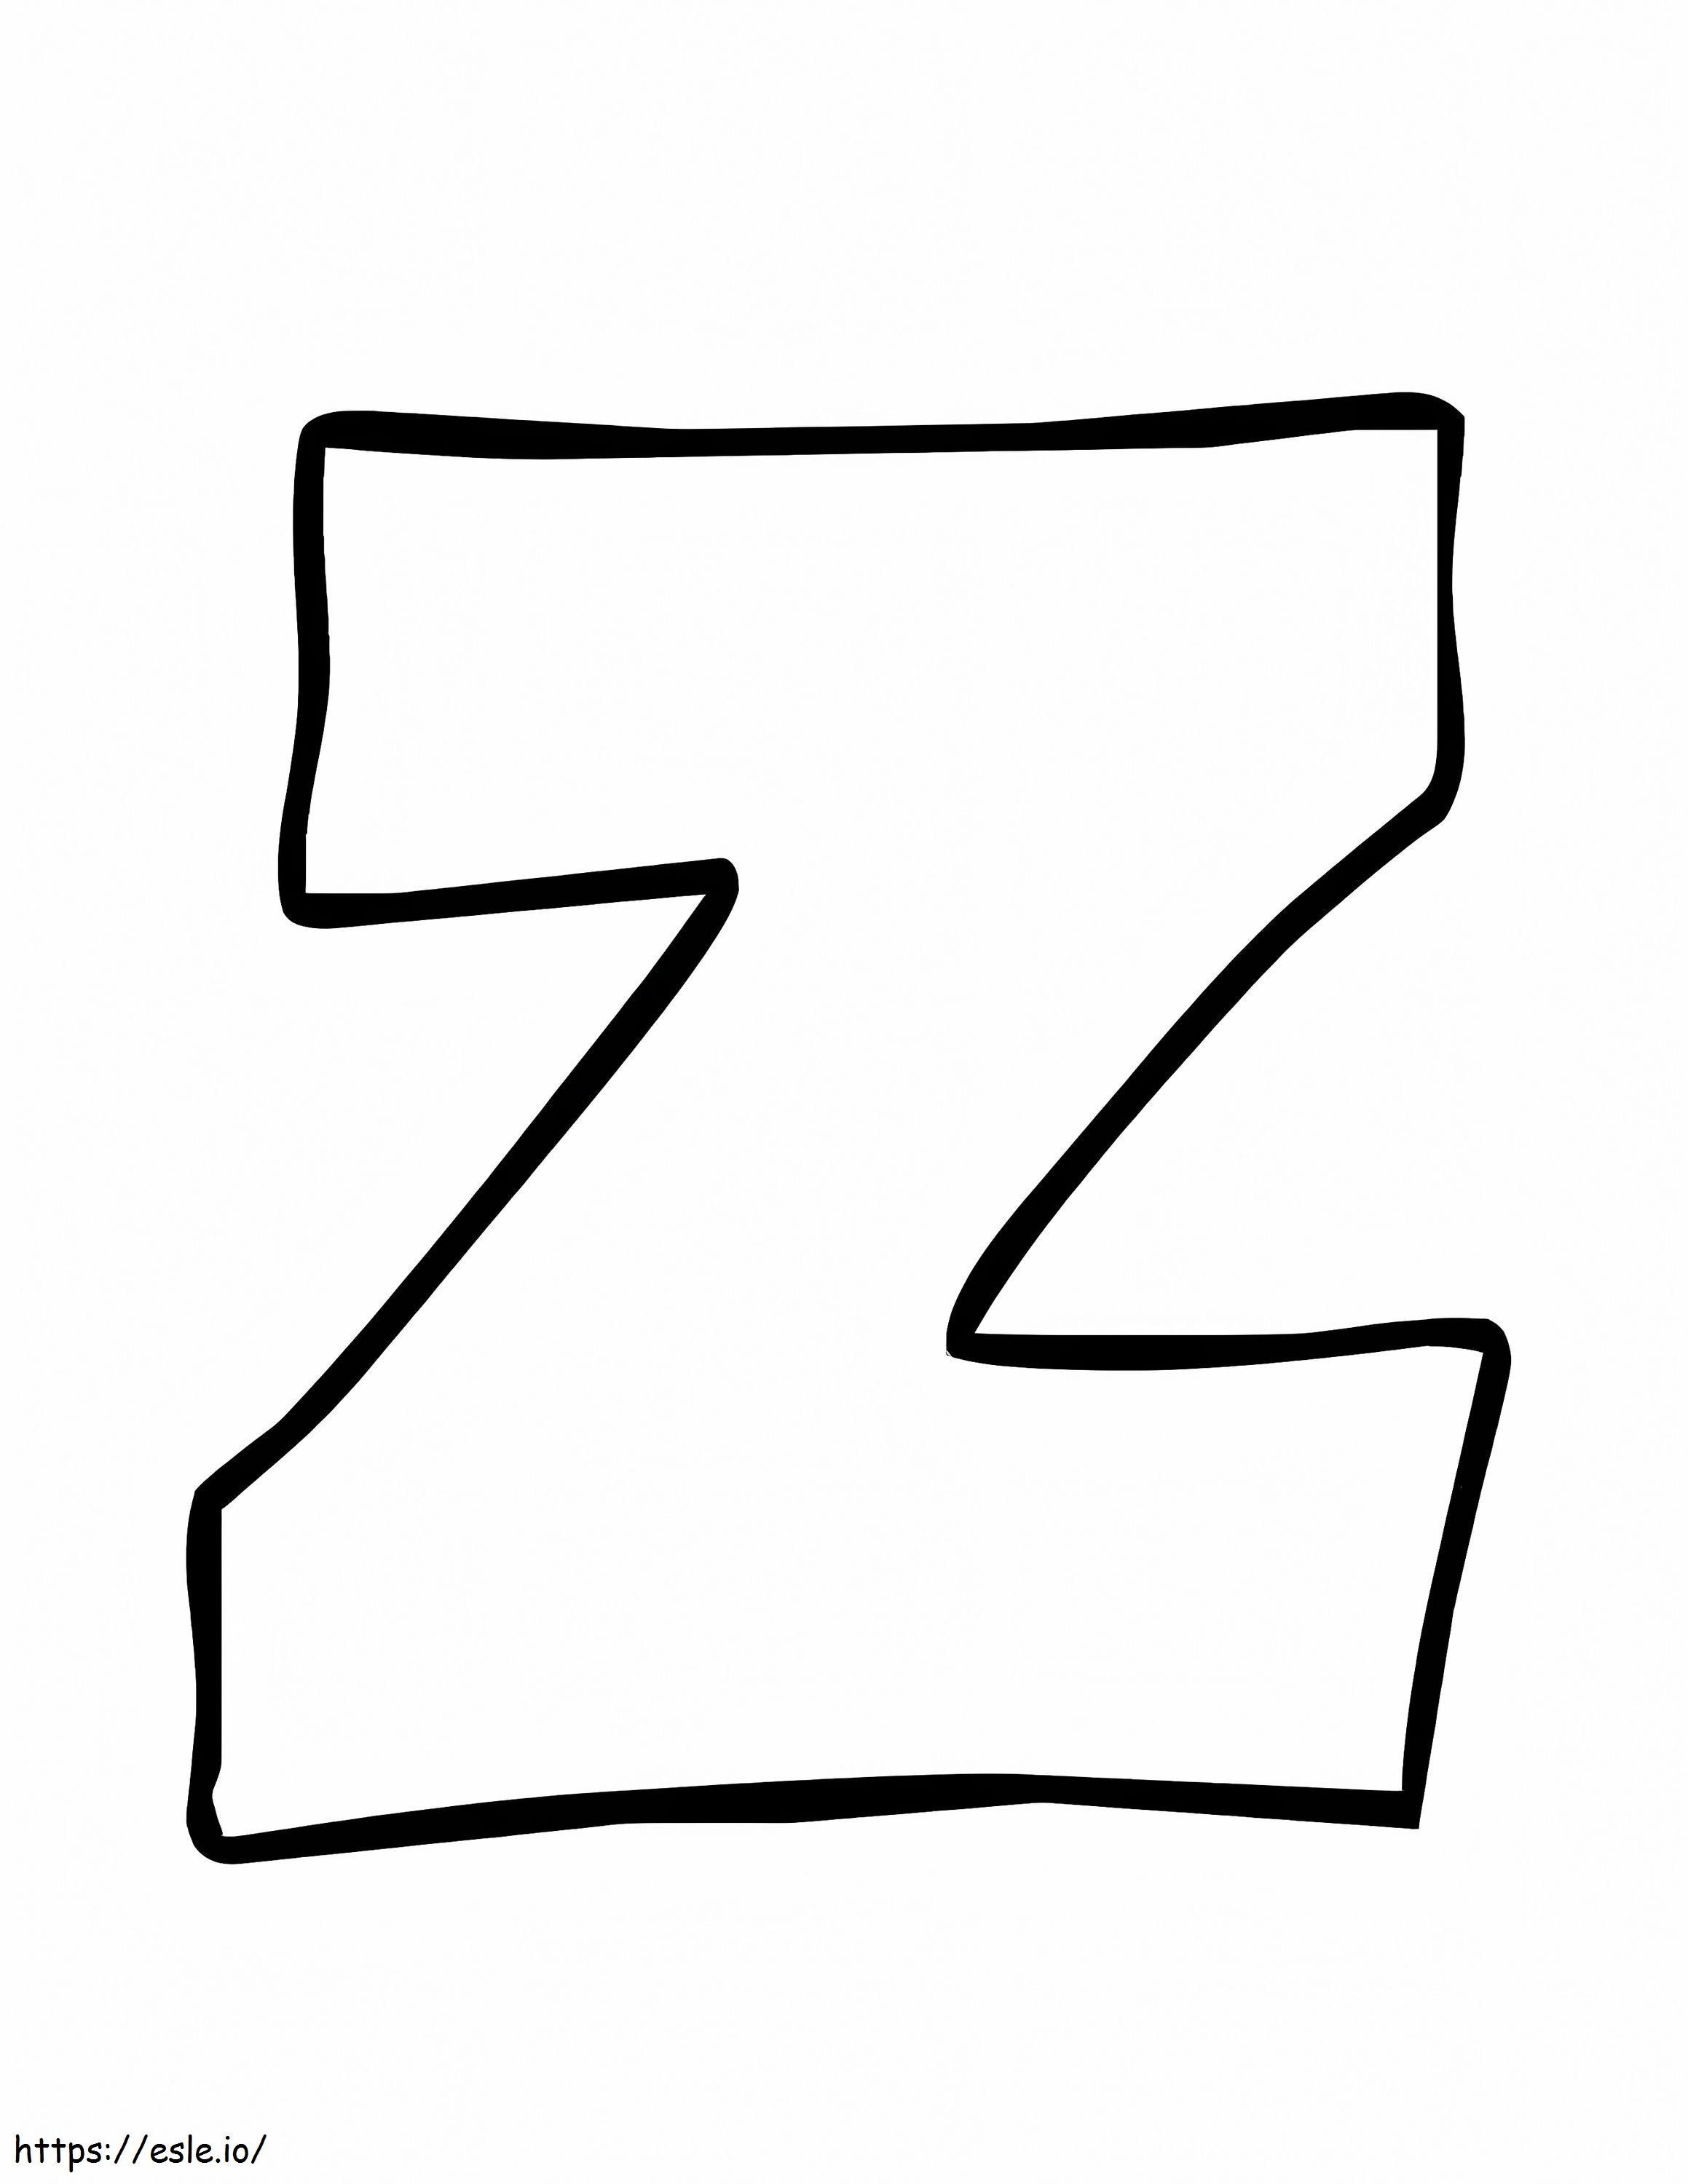 Letra Z Desenho para colorir